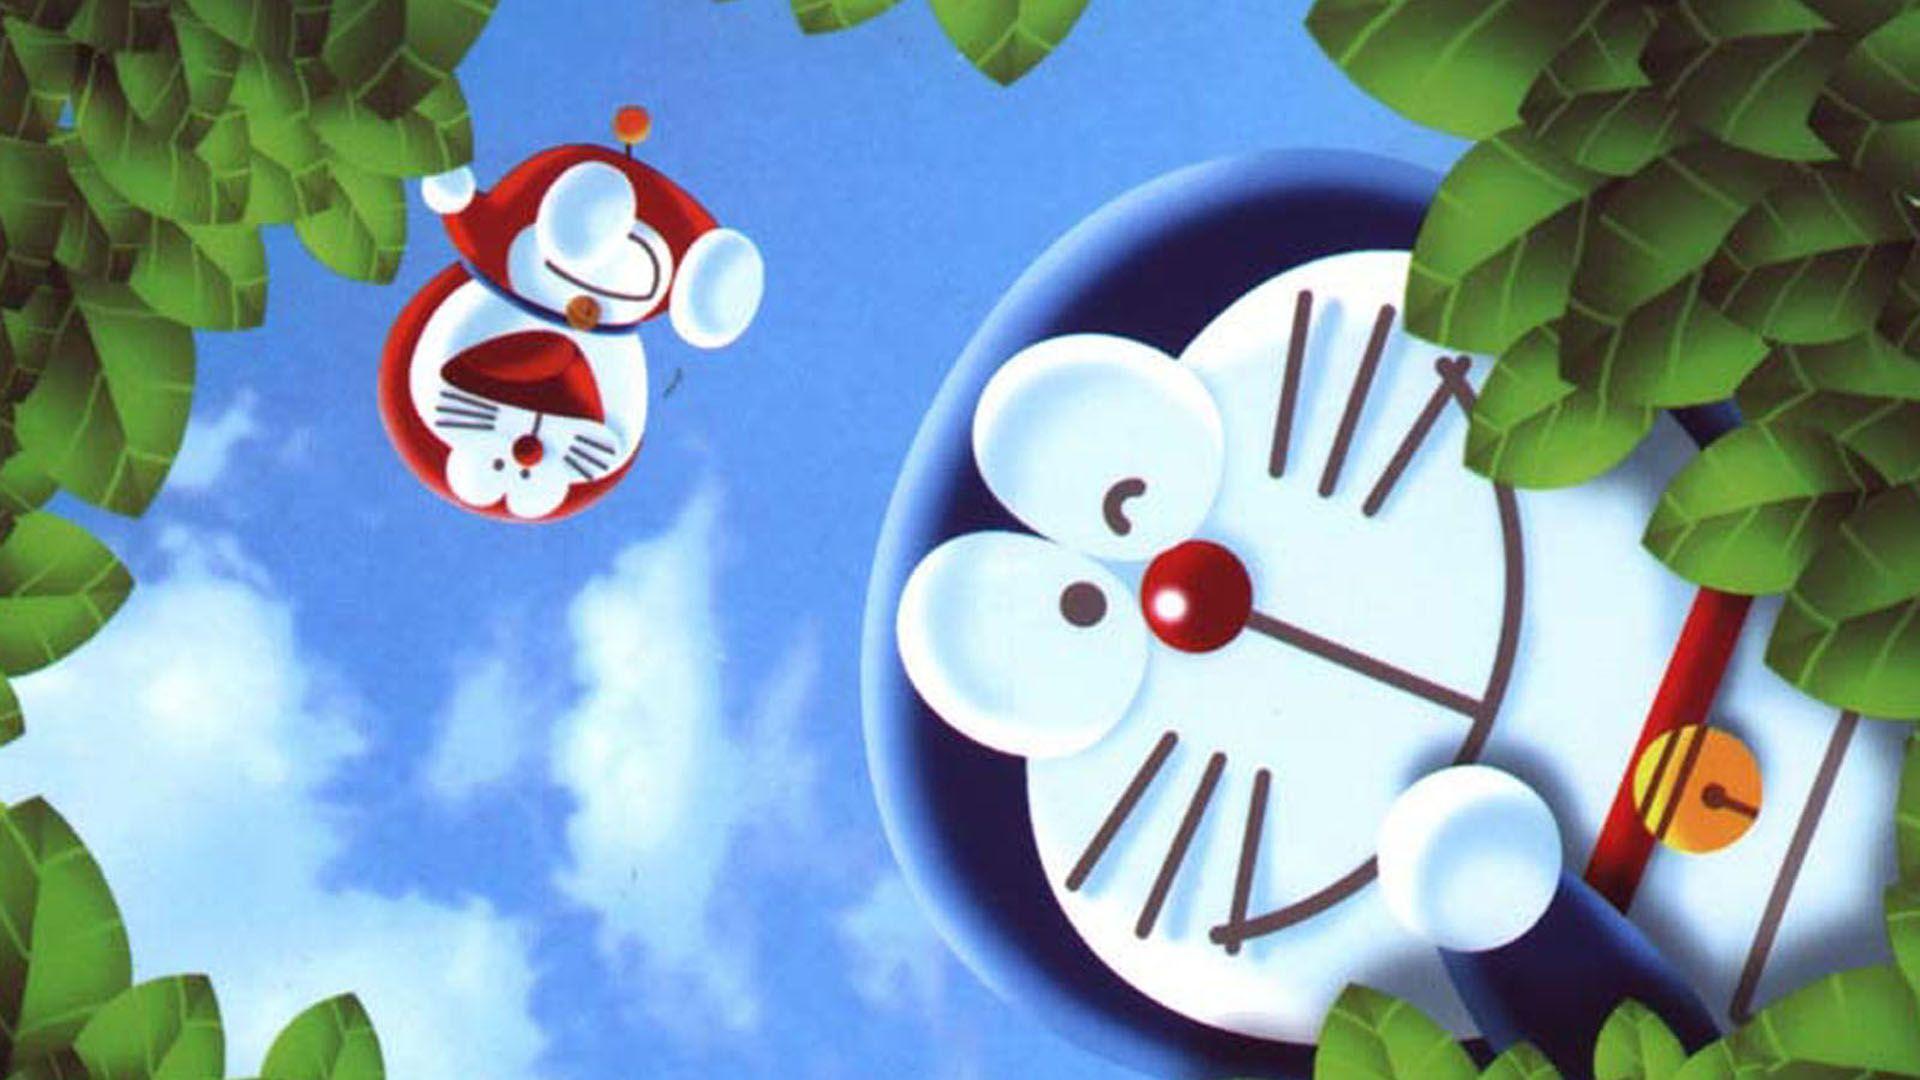 image For > Doraemon And Friends 3D Wallpaper